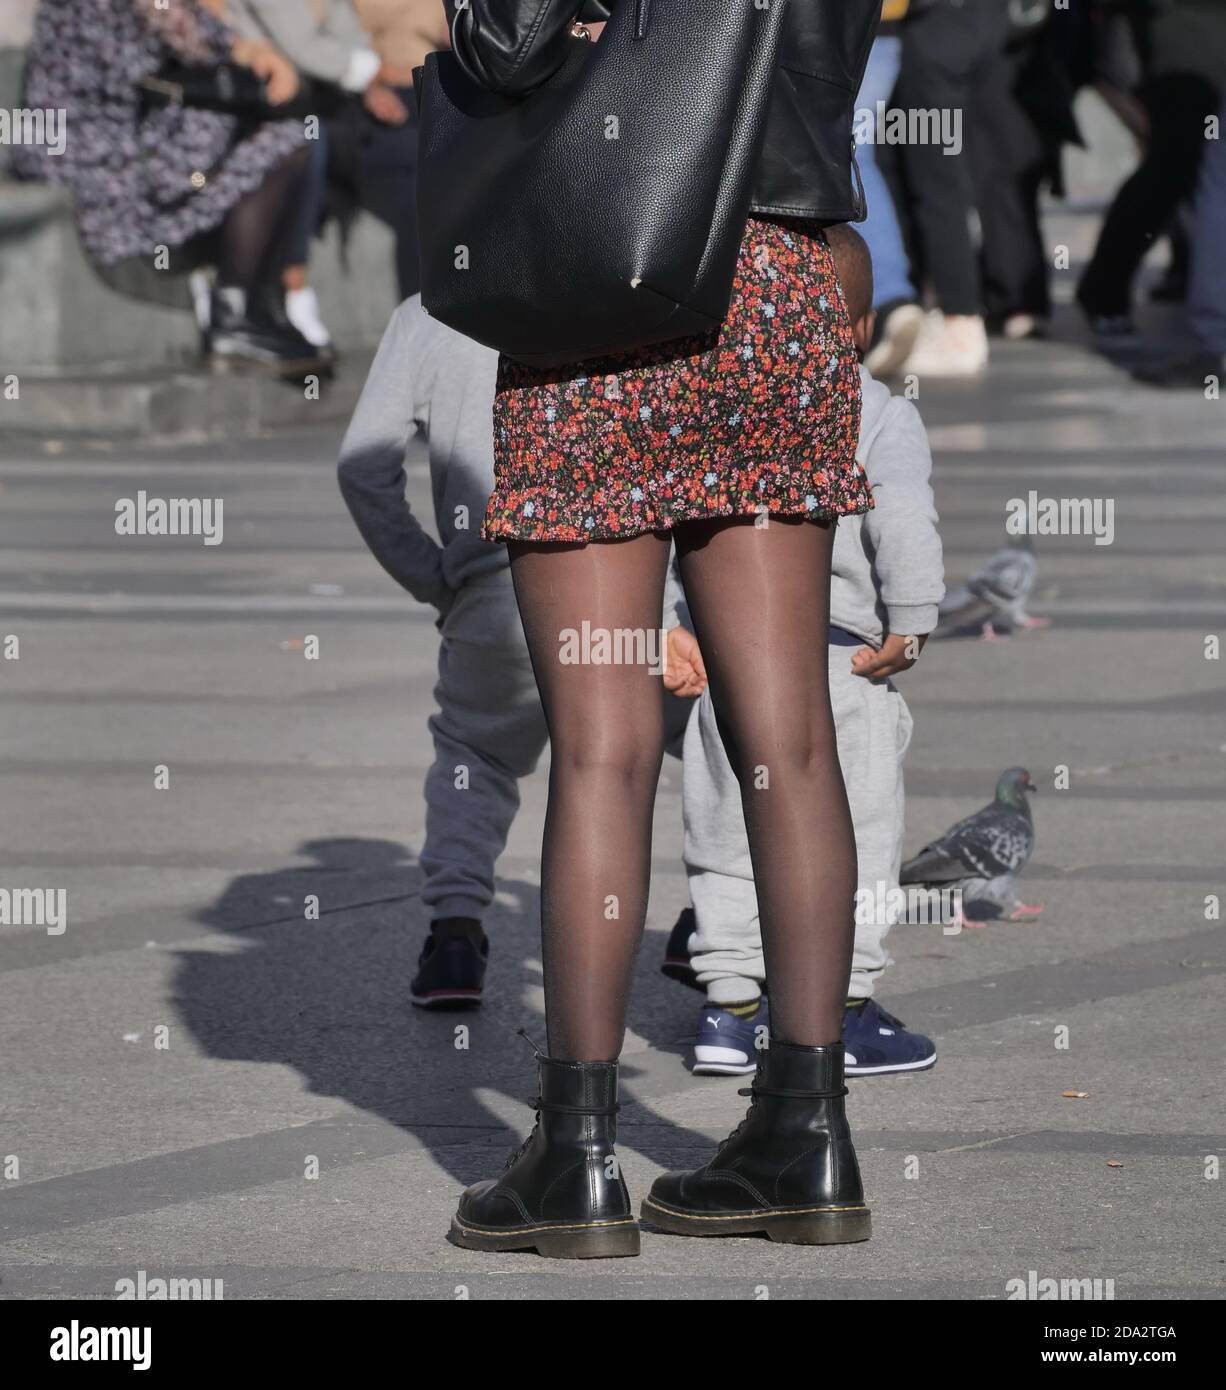 Mädchen in Minirock und schwarze Strumpfhose in Duomo Square, Mailand,  Lombardei, Italien Stockfotografie - Alamy